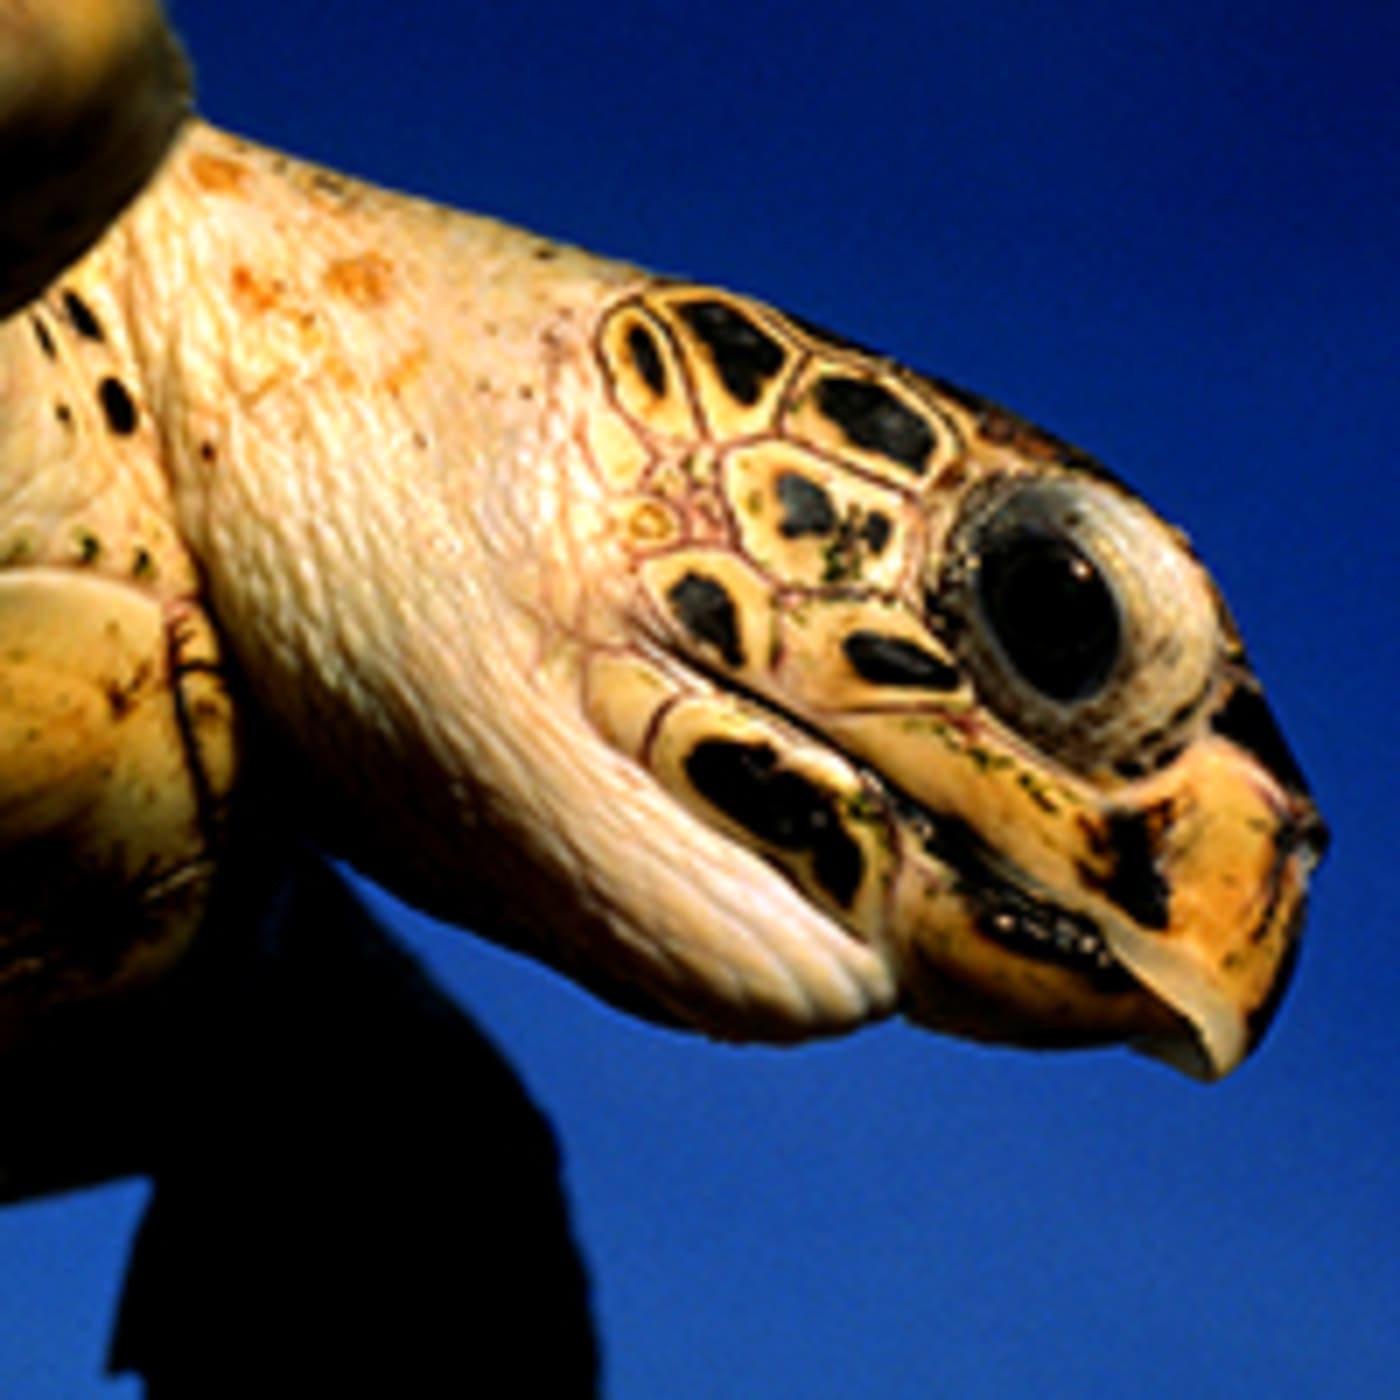 Hawksbill turtle close-up